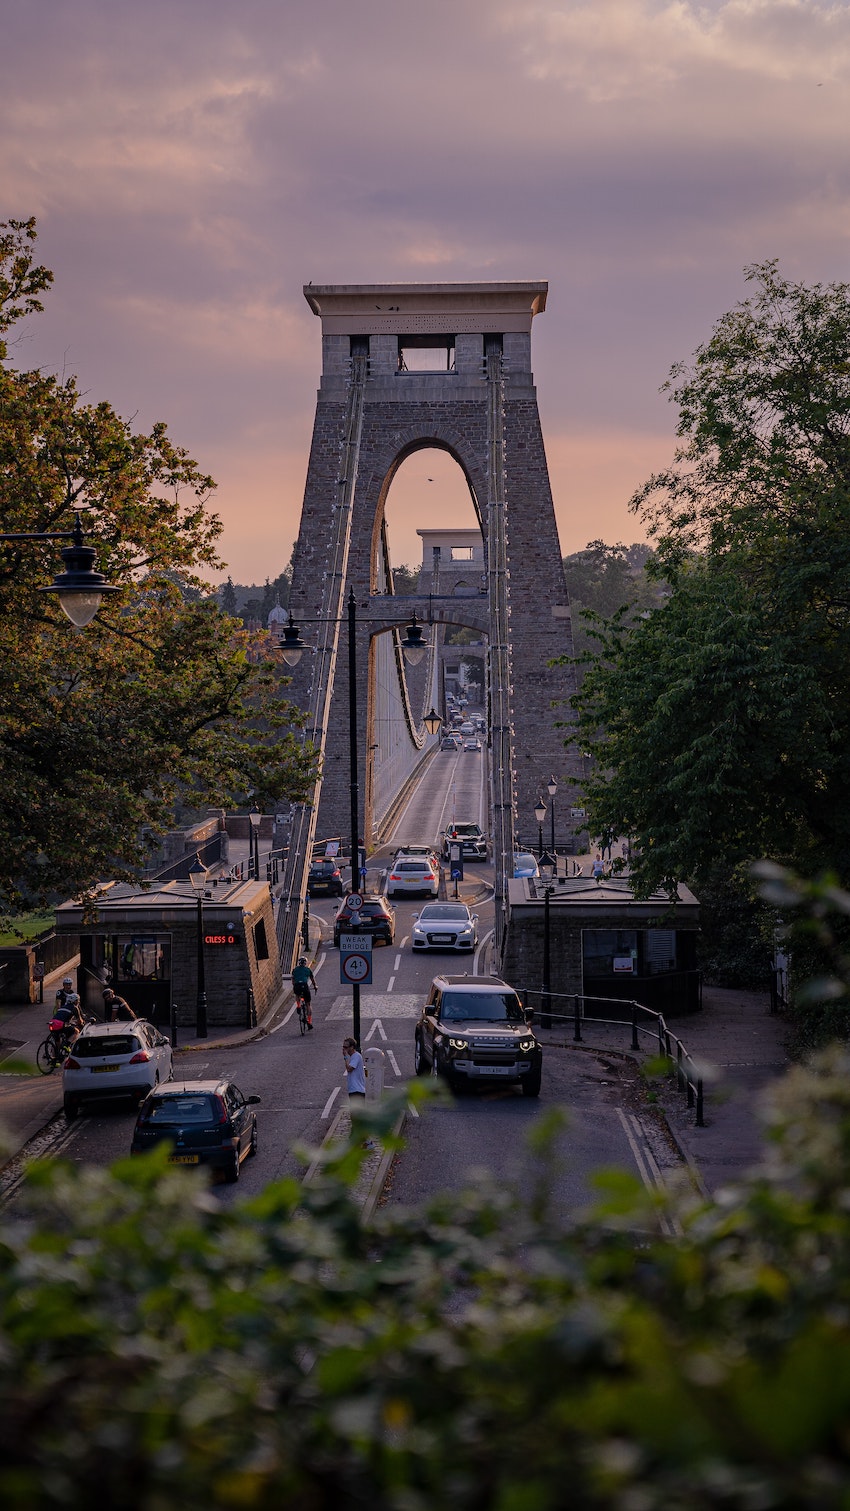 Destination UK - 7 of the Best Cities in the UK to Visit - Clifton Suspension Bridge, Bristol